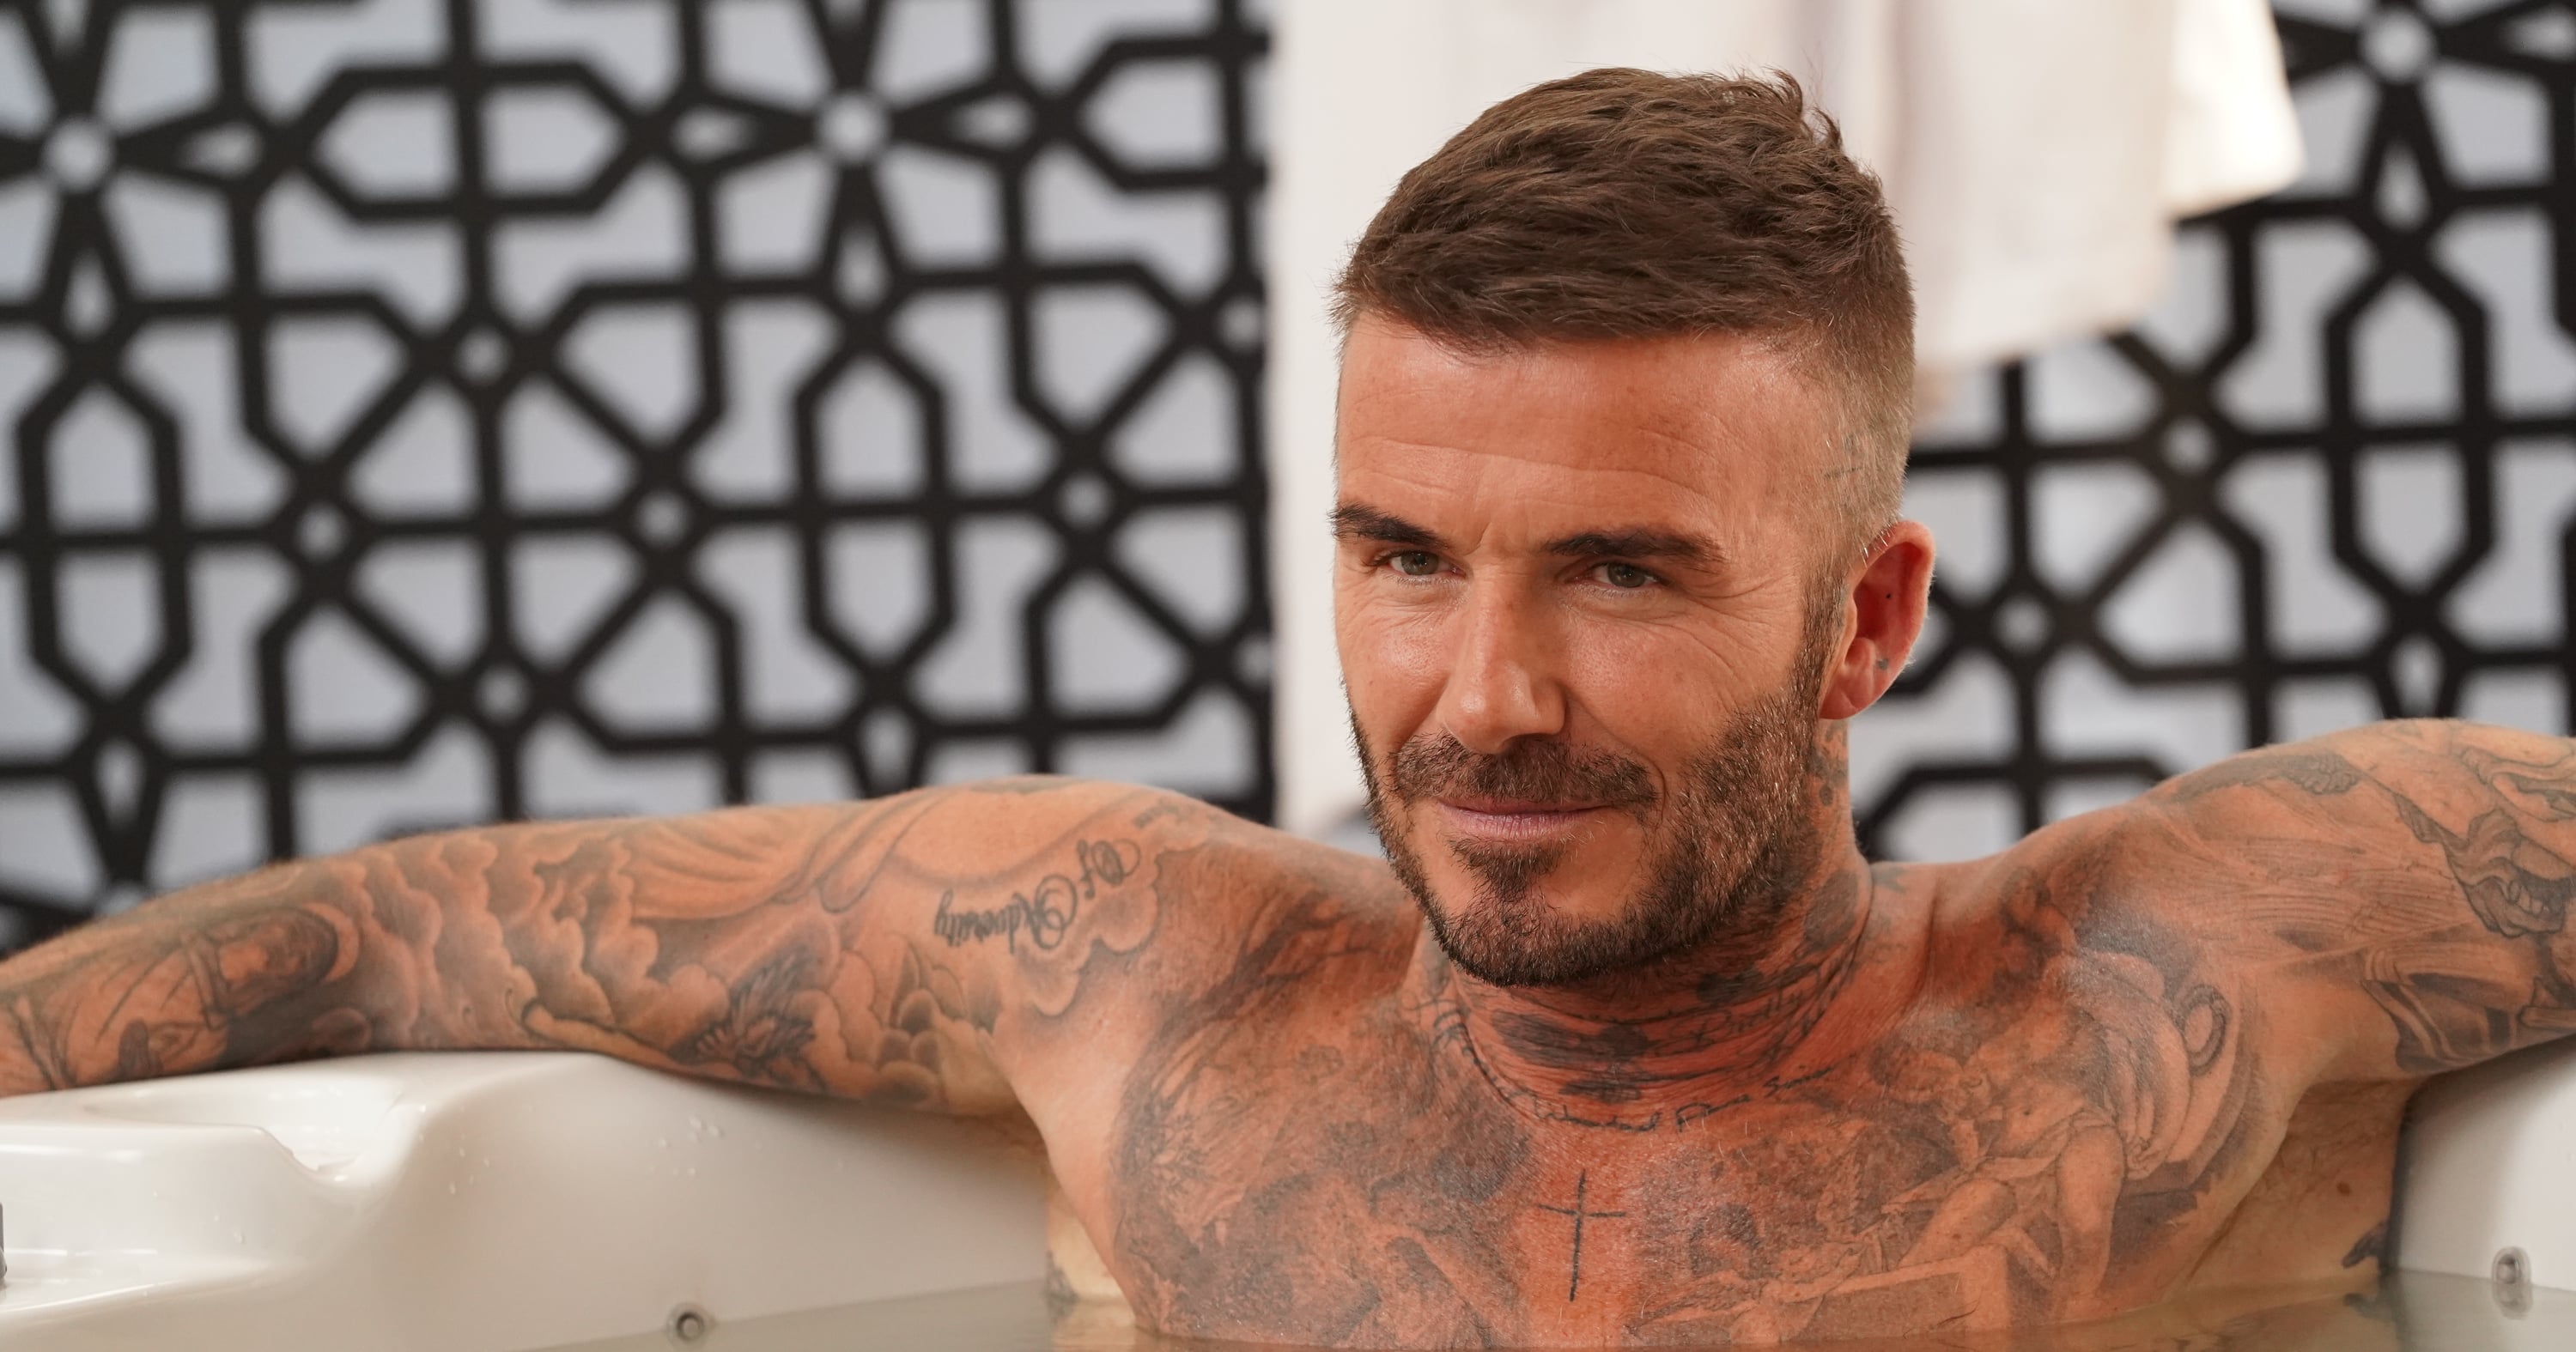 David Beckham's Tattoos and Their Meaning - UnfoundBeauty.com